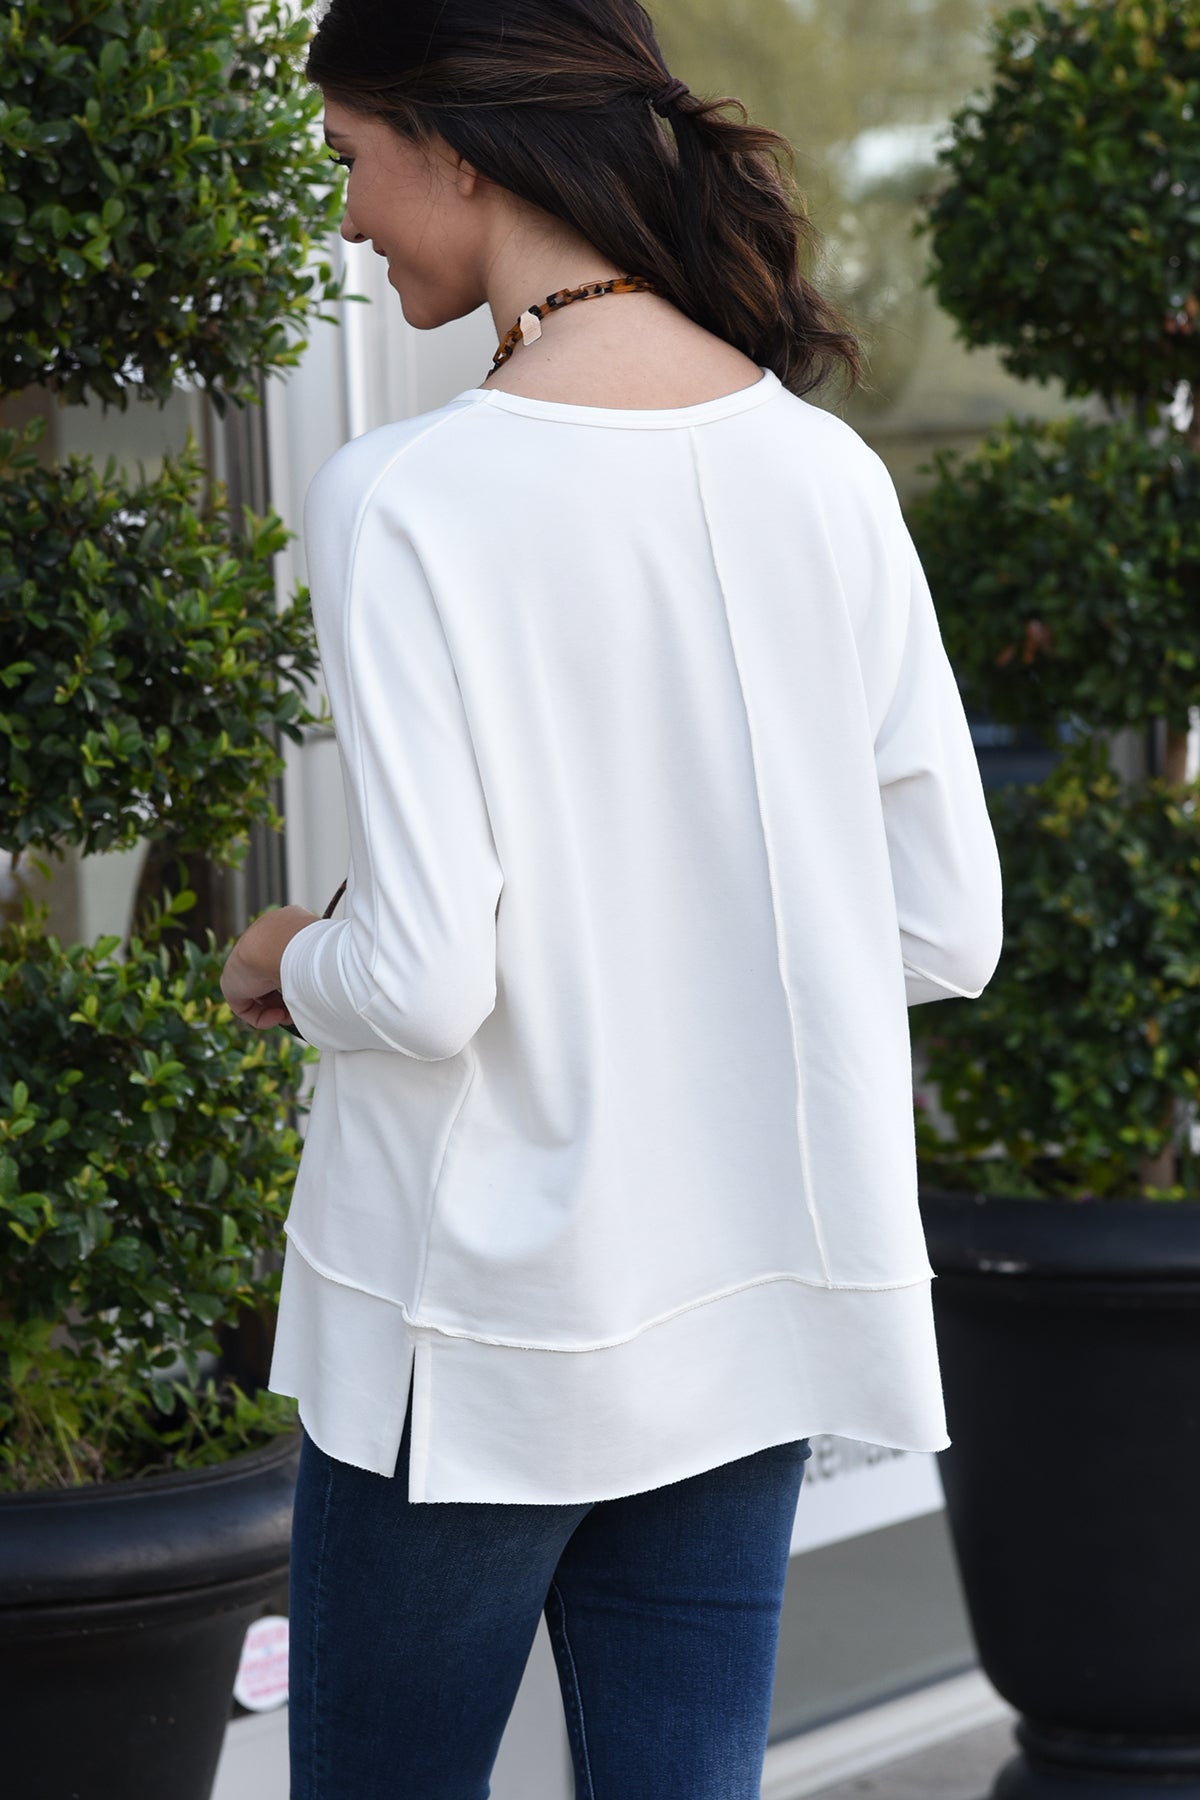 SPANX, Tops, Spanx 3x Perfect Length Dolman 34 Sleeve Soft Pullover Top  Sweatshirt White